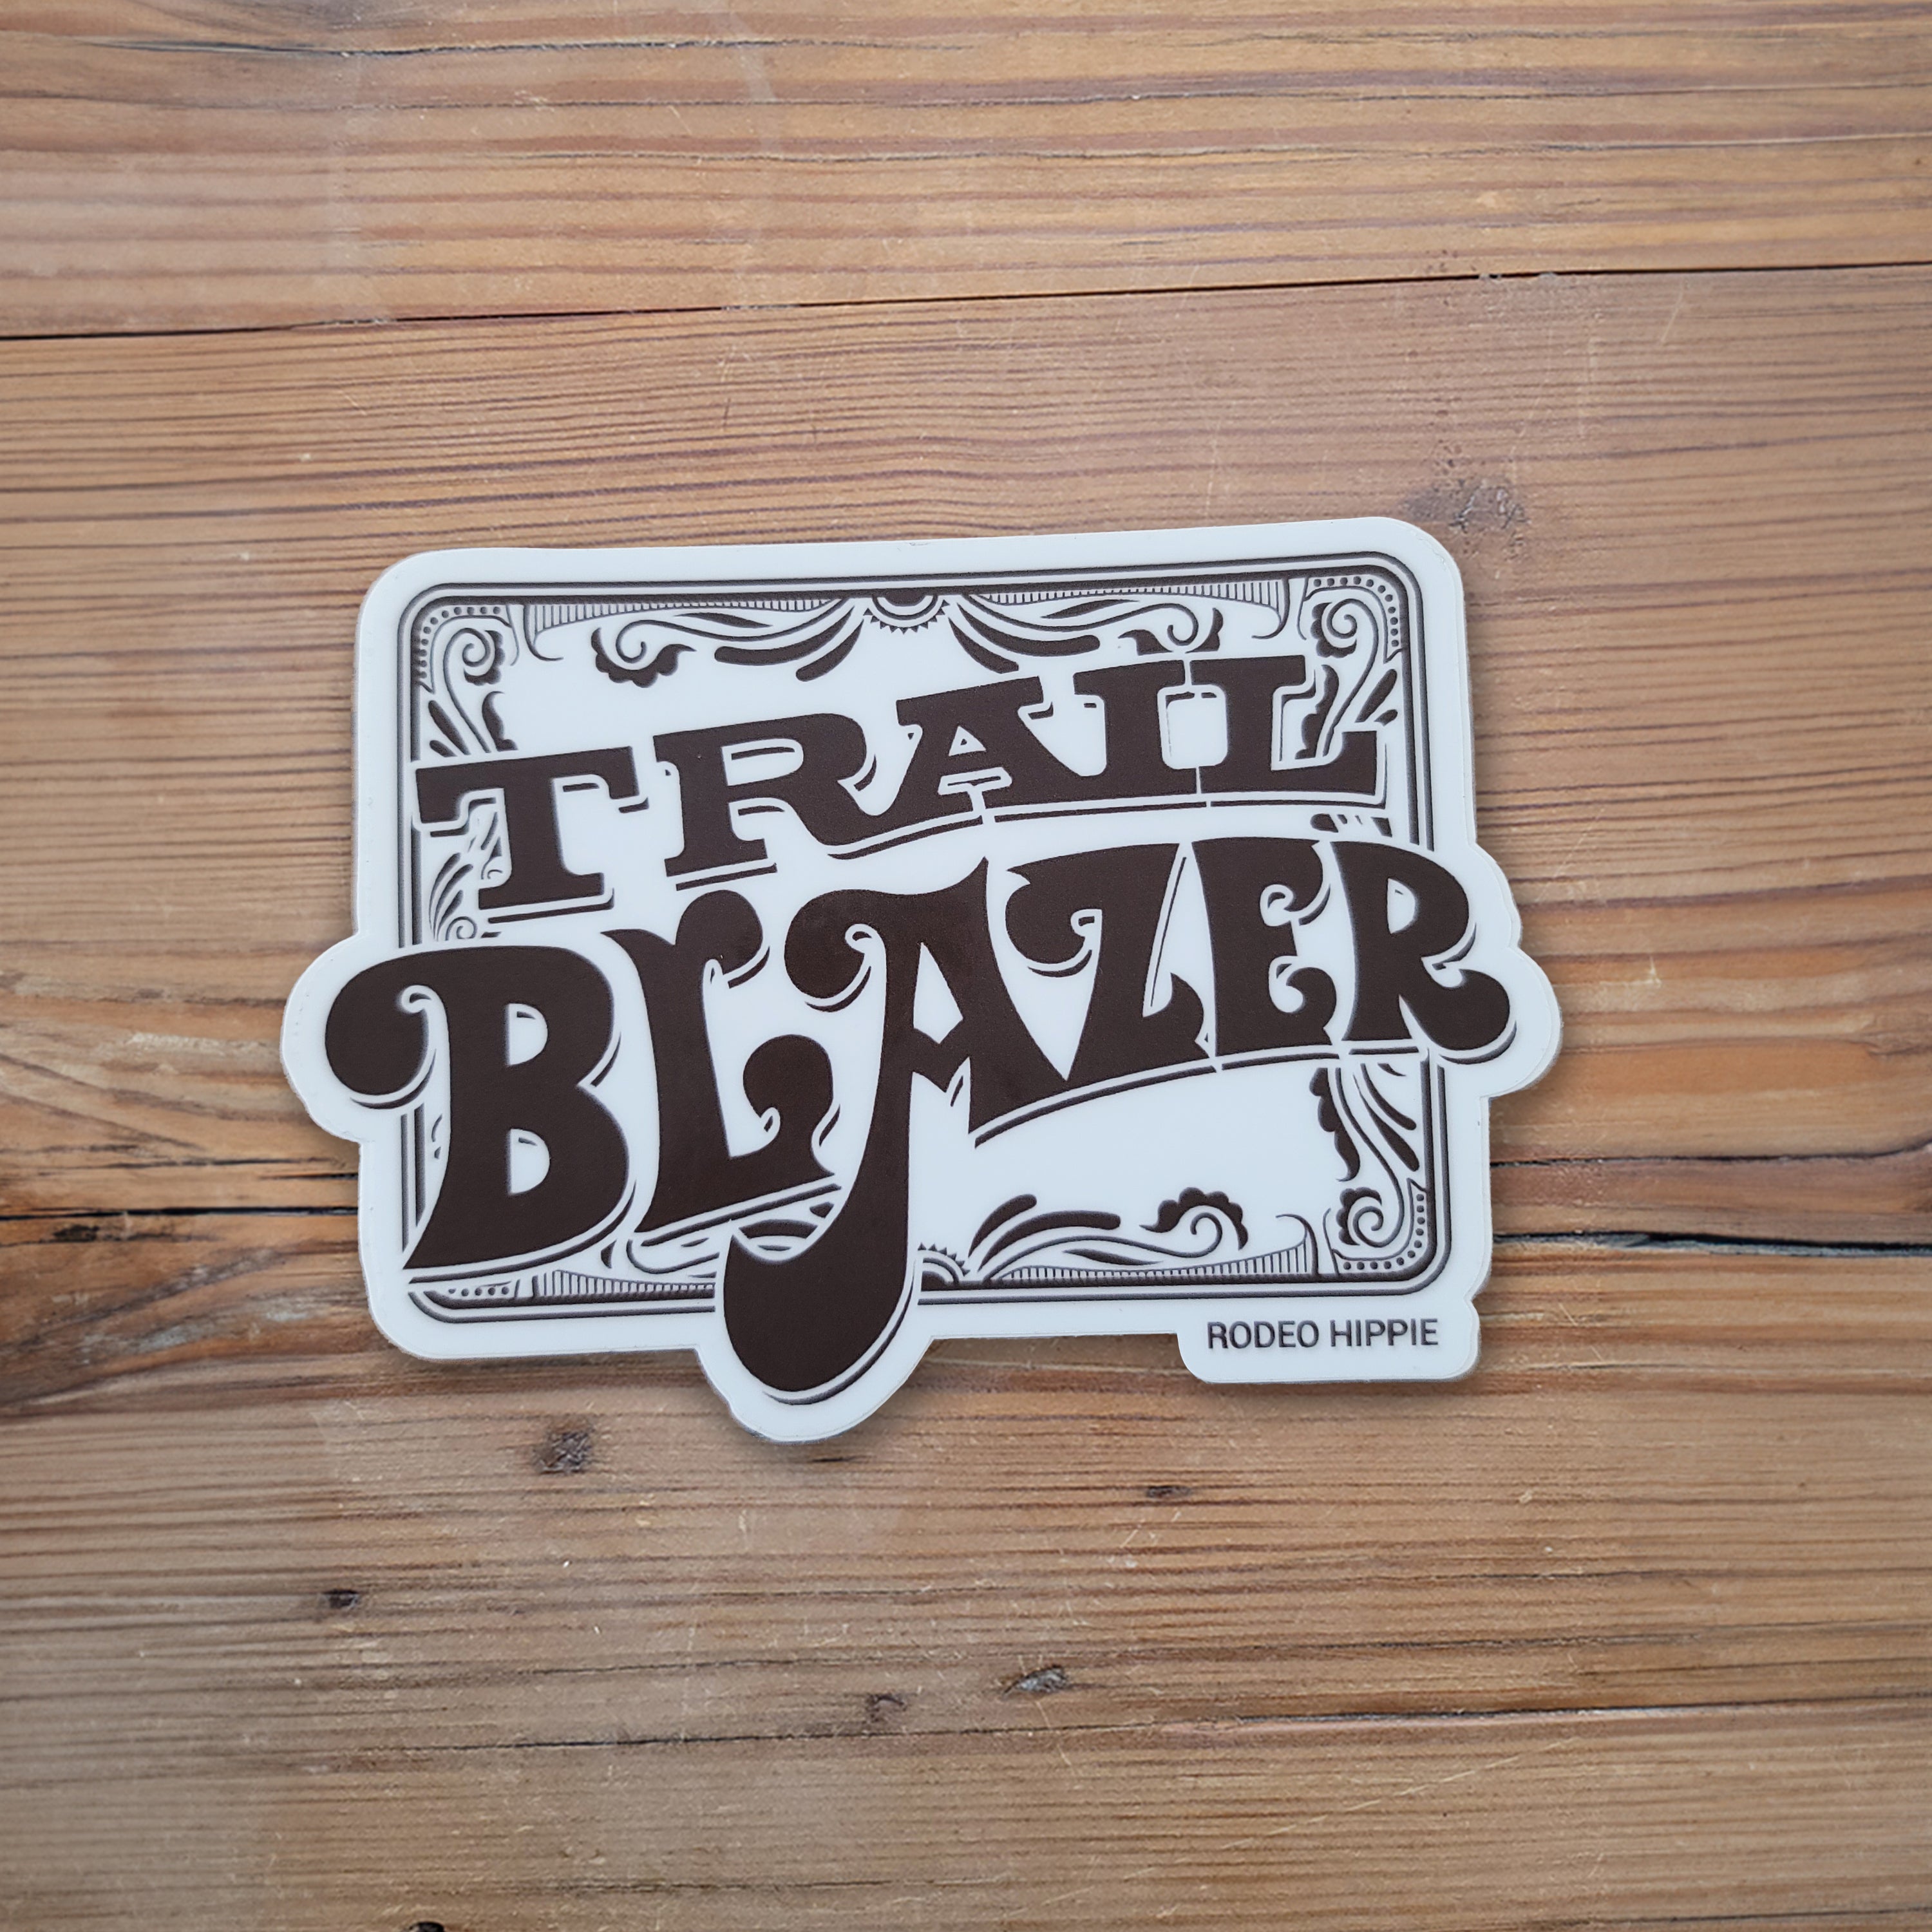 Trail Blazer Sticker